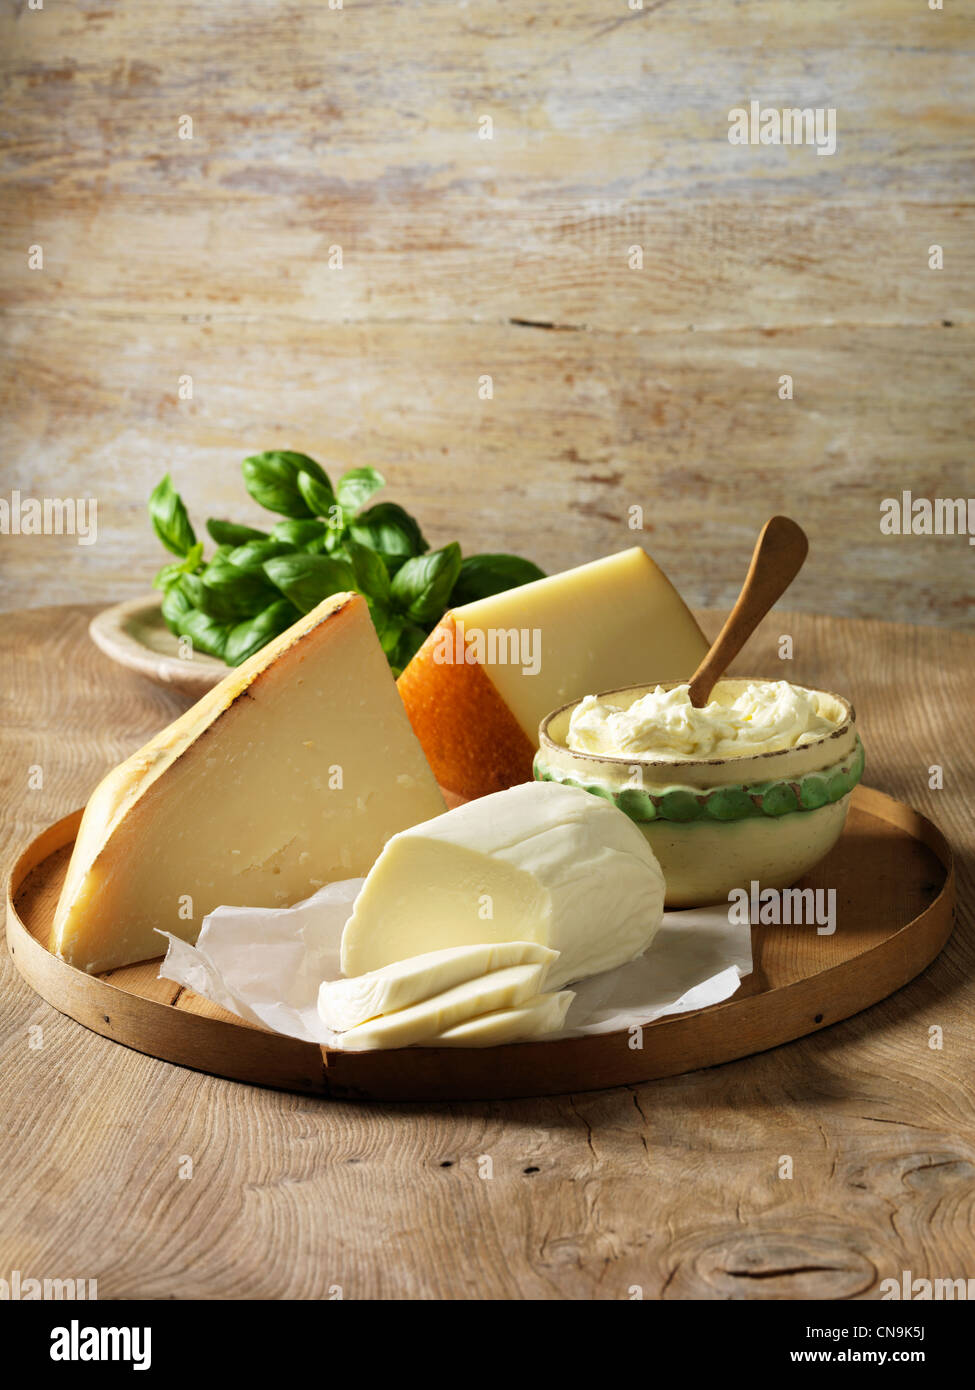 https://c8.alamy.com/comp/CN9K5J/italian-cheeses-on-wooden-board-CN9K5J.jpg